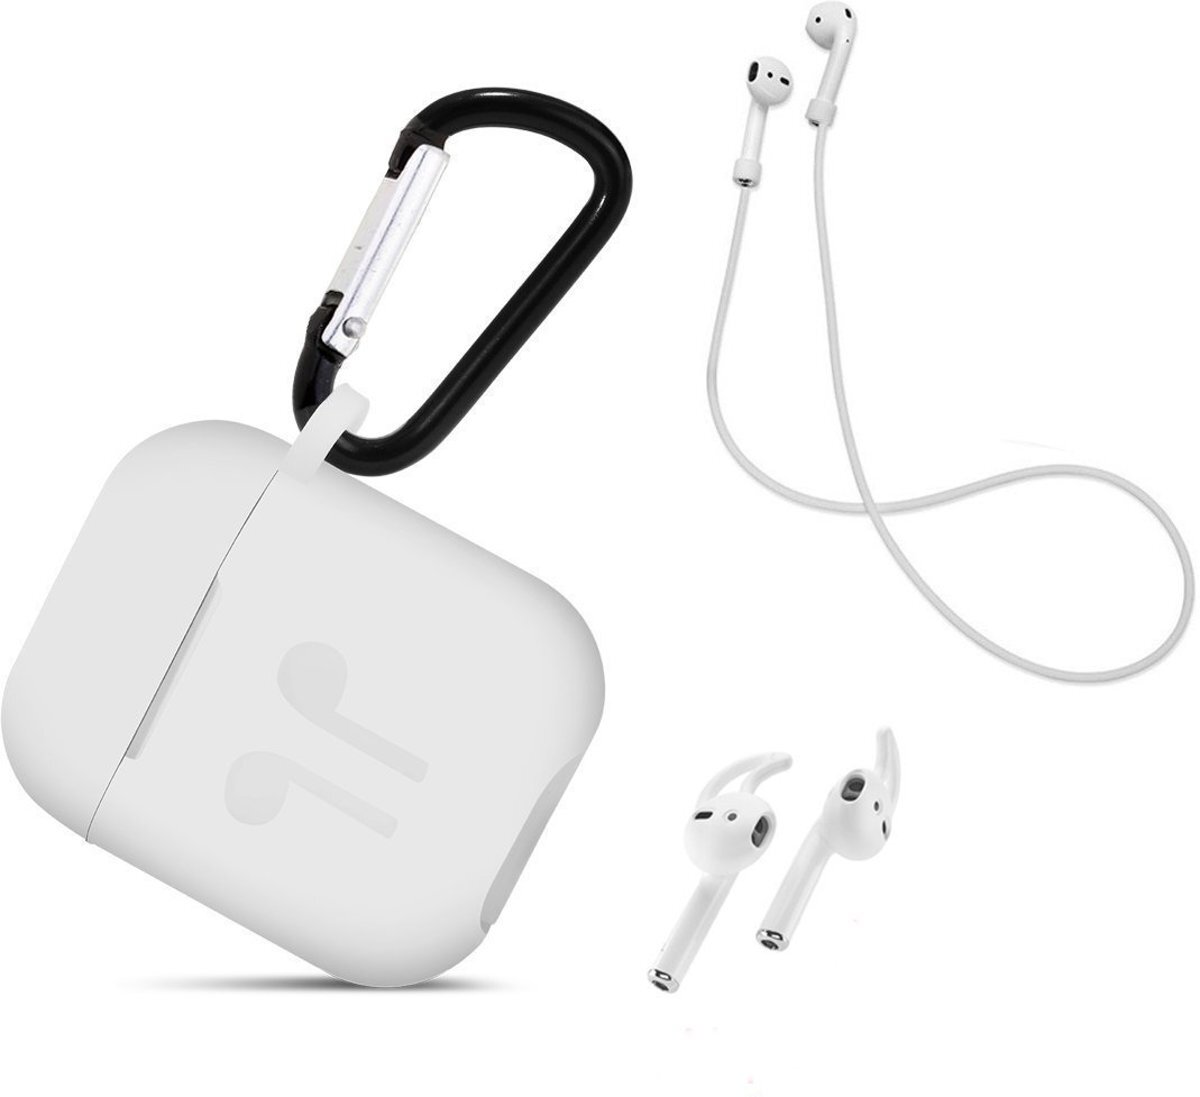 Jales 3 in 1 set Airpods hoesje siliconen case cover beschermhoes + strap + earhoox voor Apple Airpods - wit